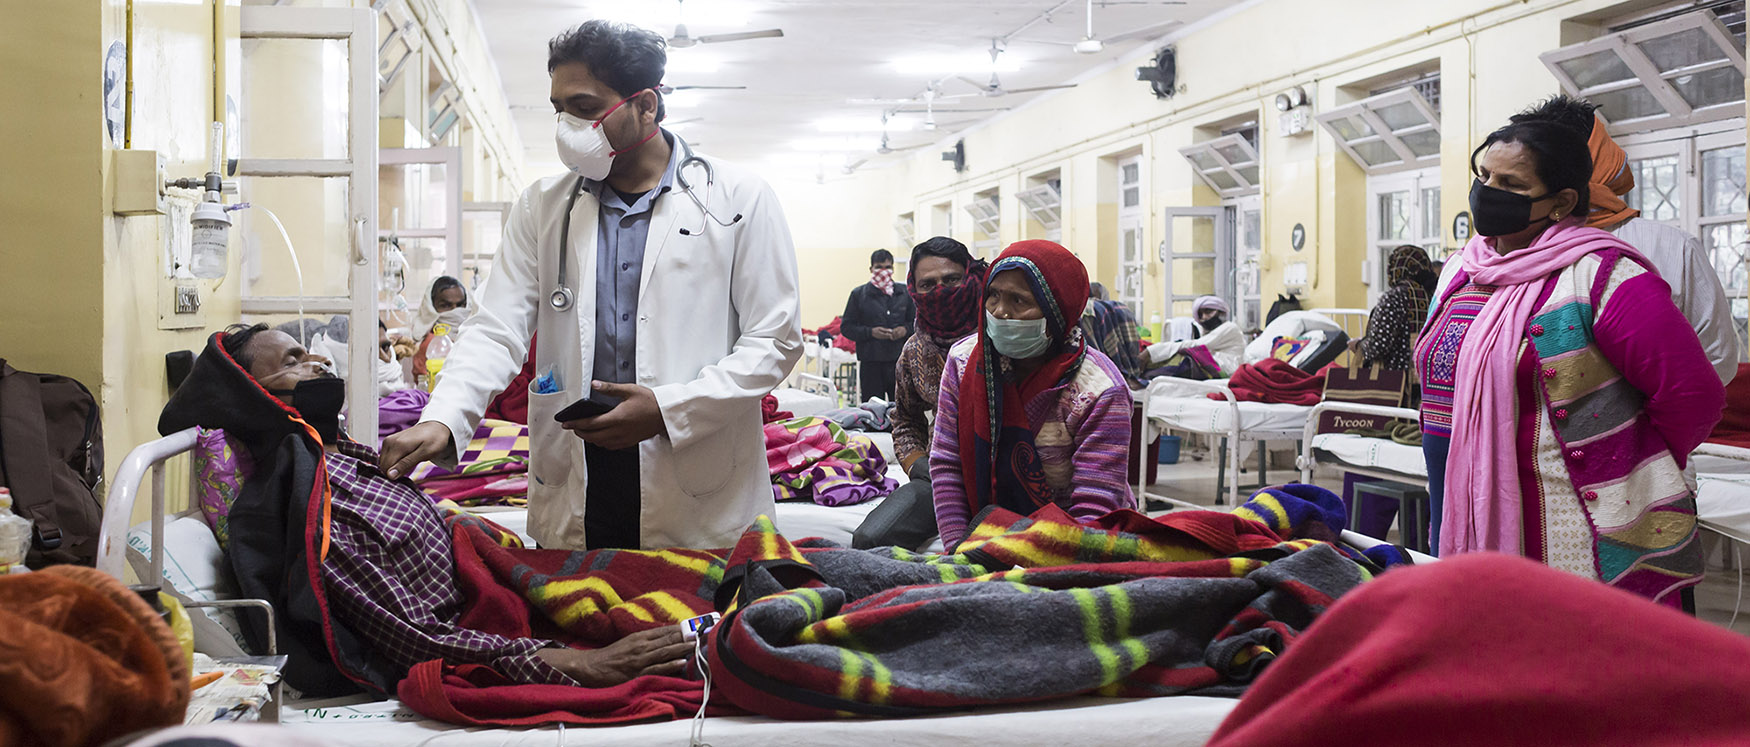 TB hospital ward in Dehli. Image by Ben Phillips